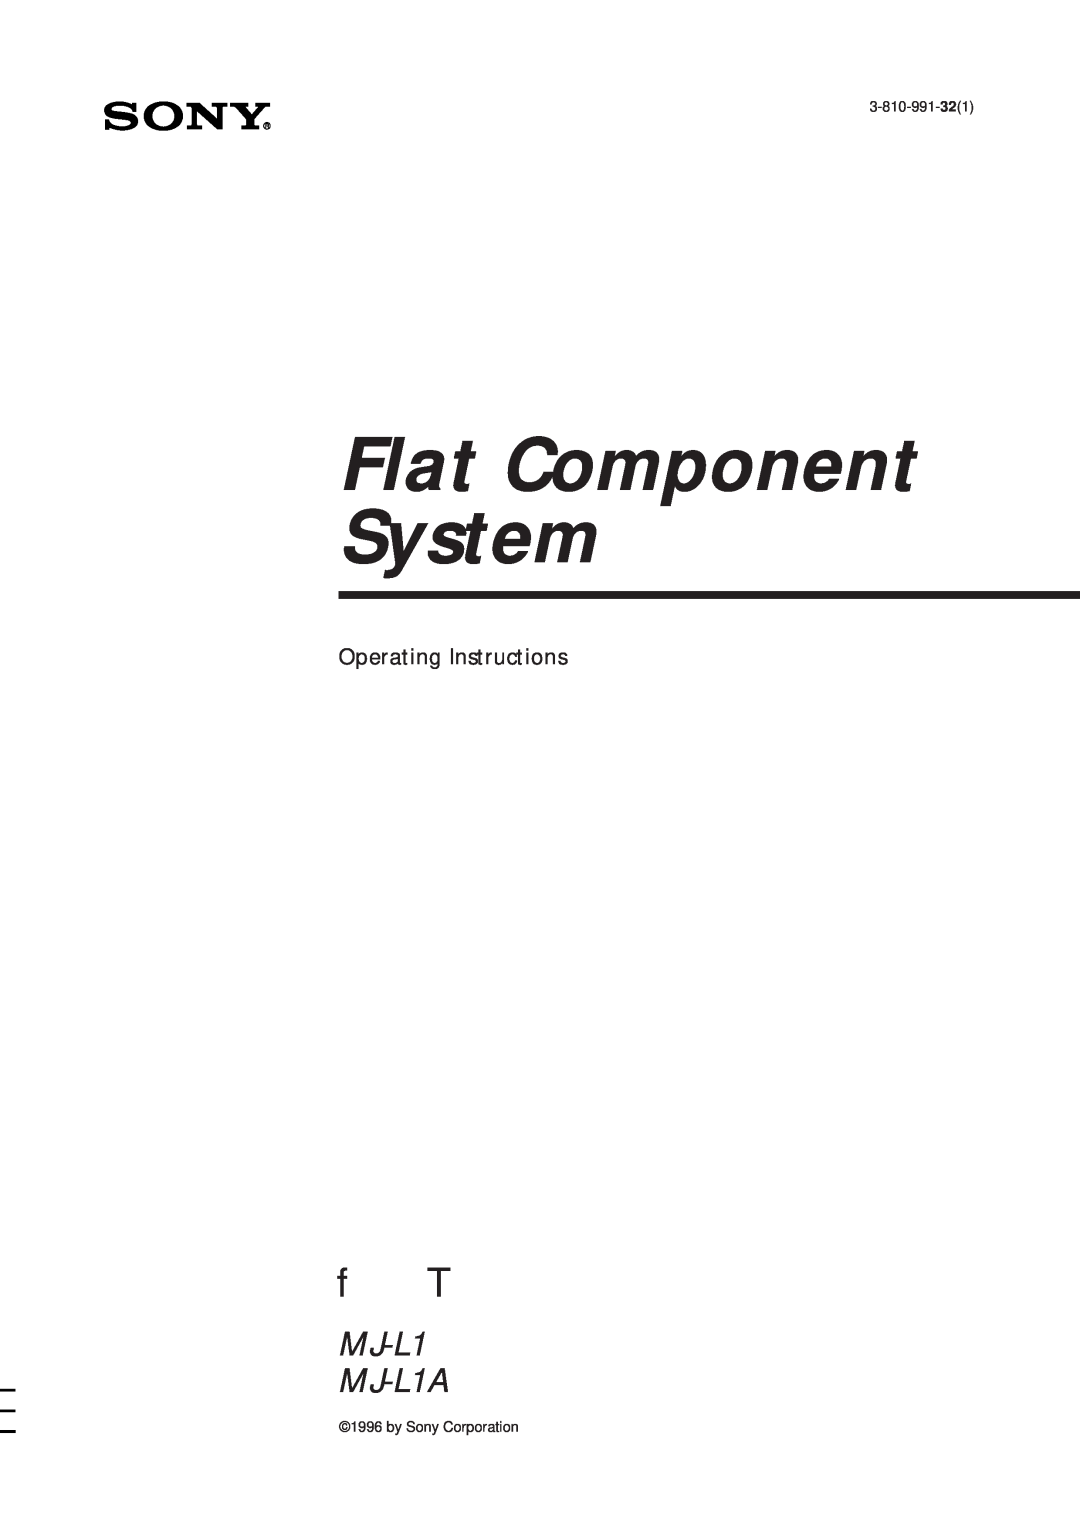 Sony MJ-L1 MJ-L1A operating instructions Flat Component System, Operating Instructions, 3-810-991-321, by Sony Corporation 